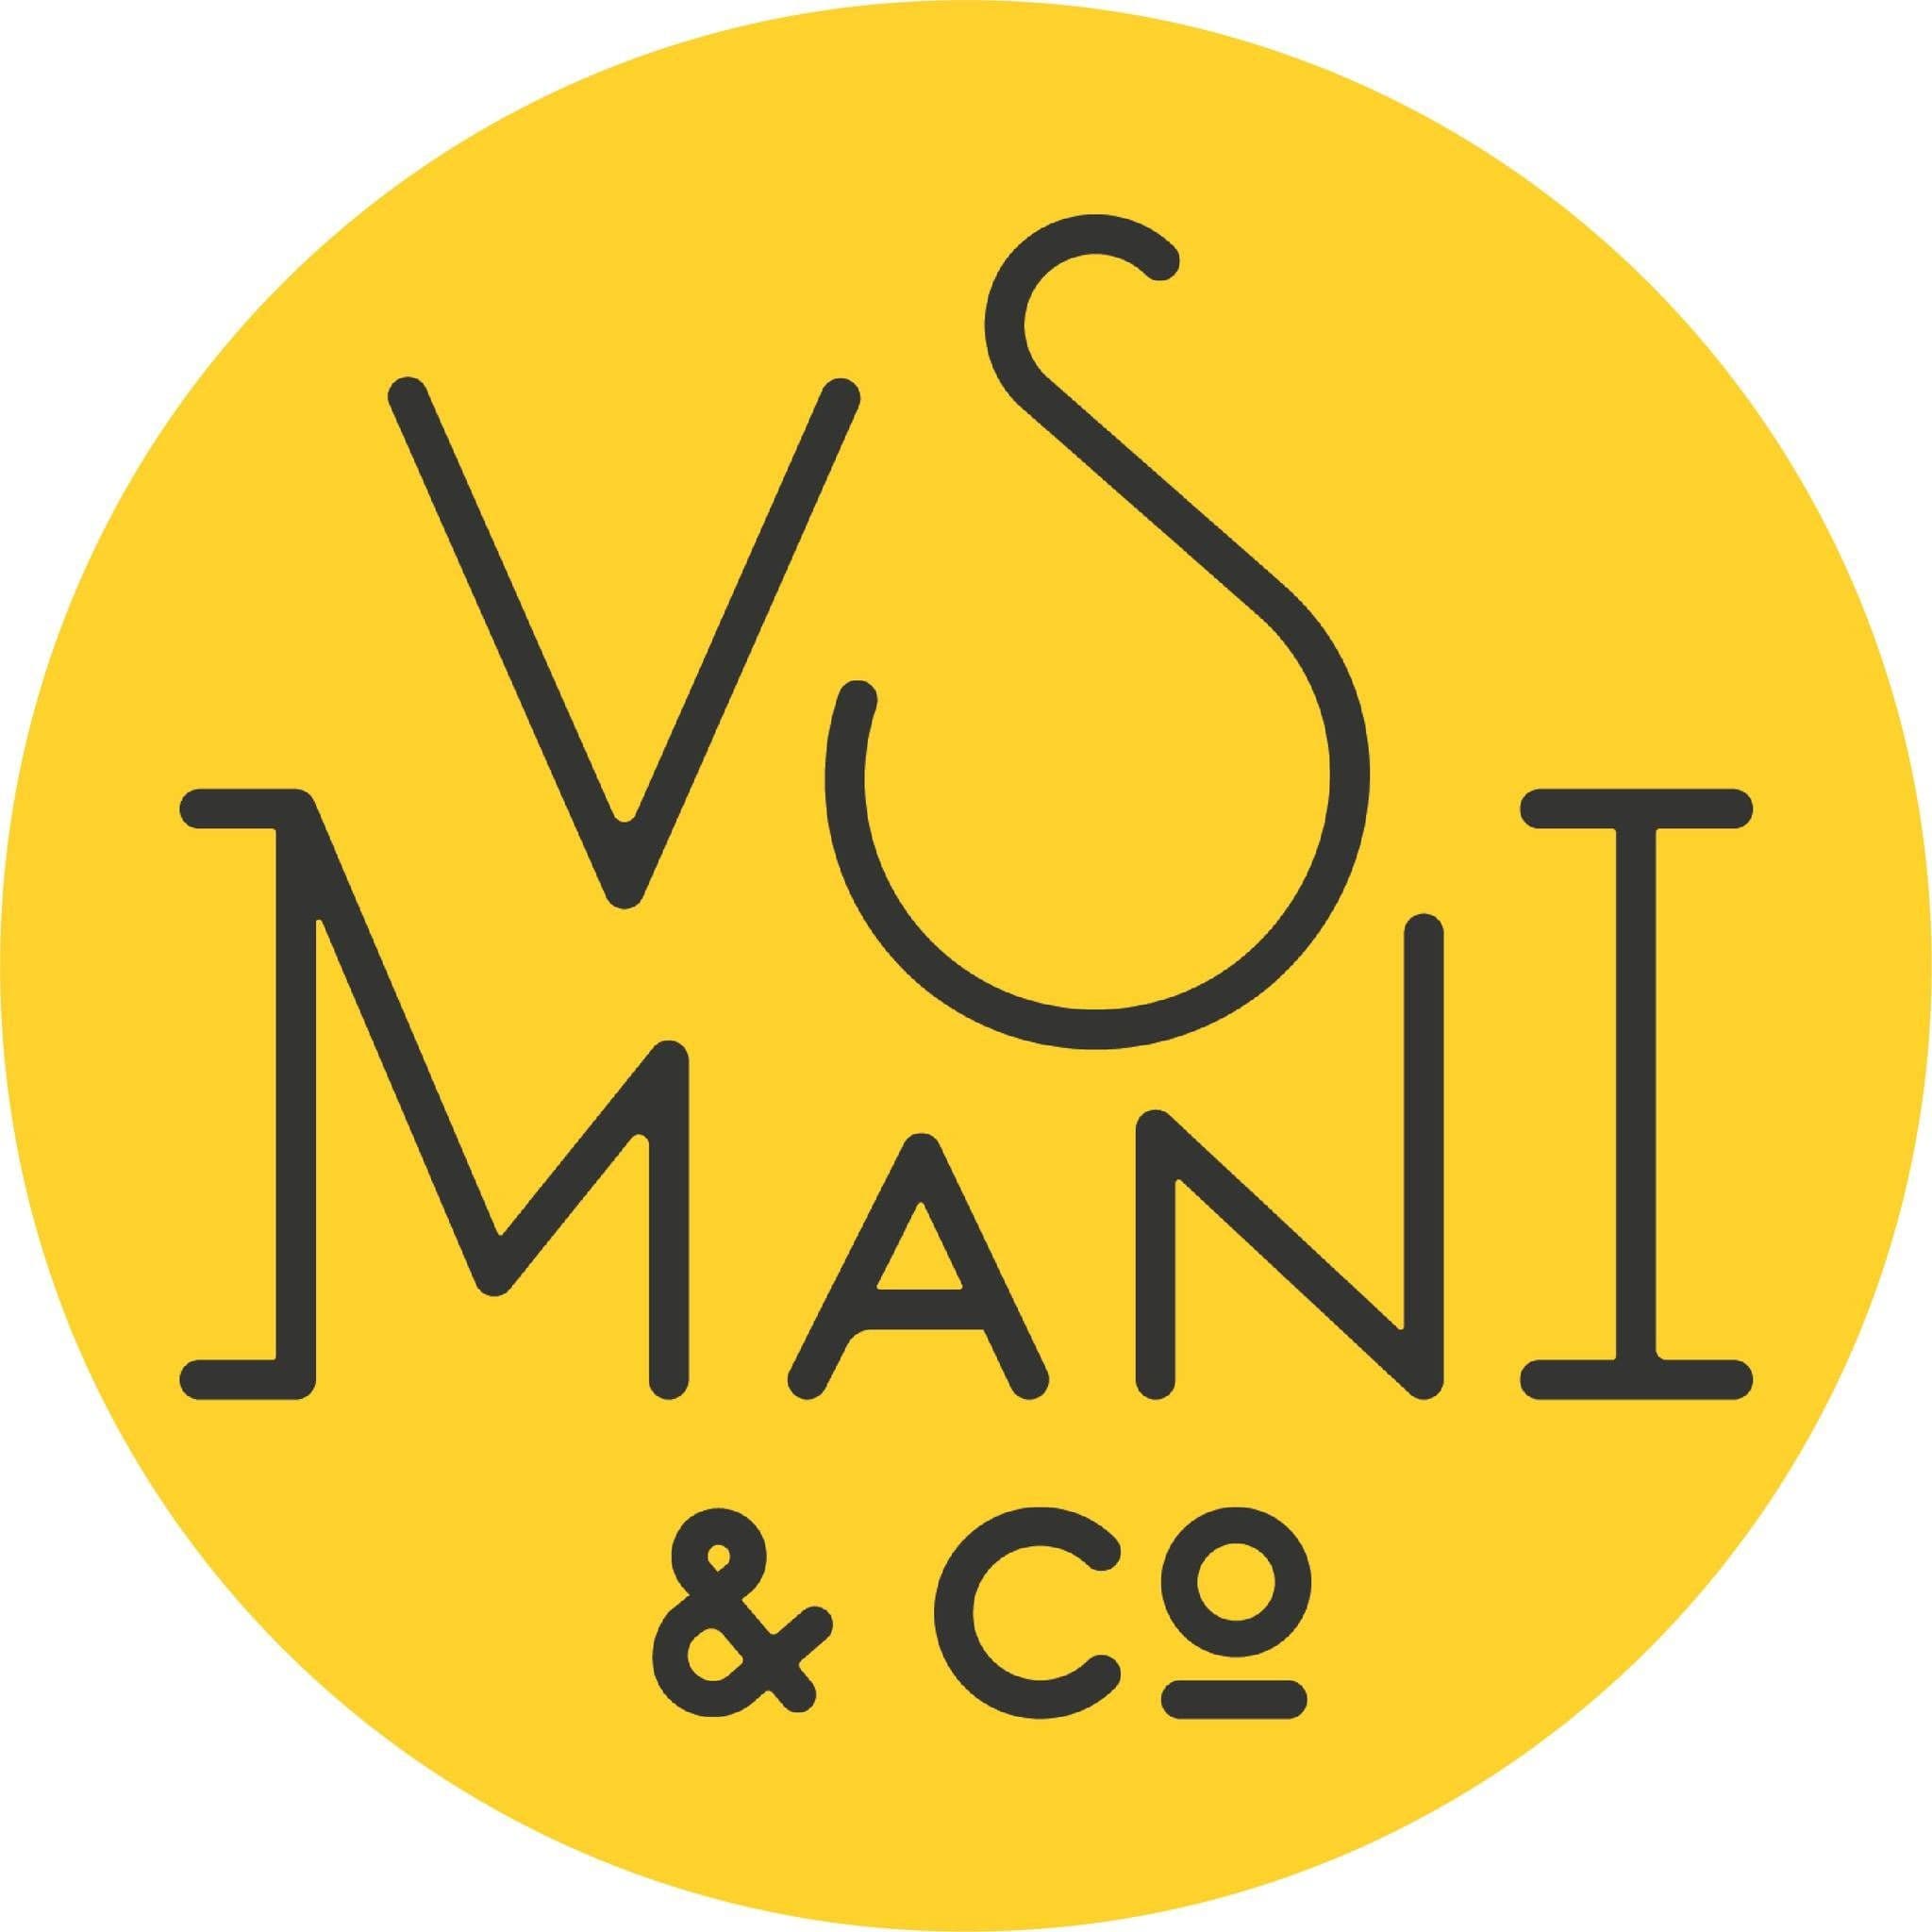 VS Mani & Co Logo Image